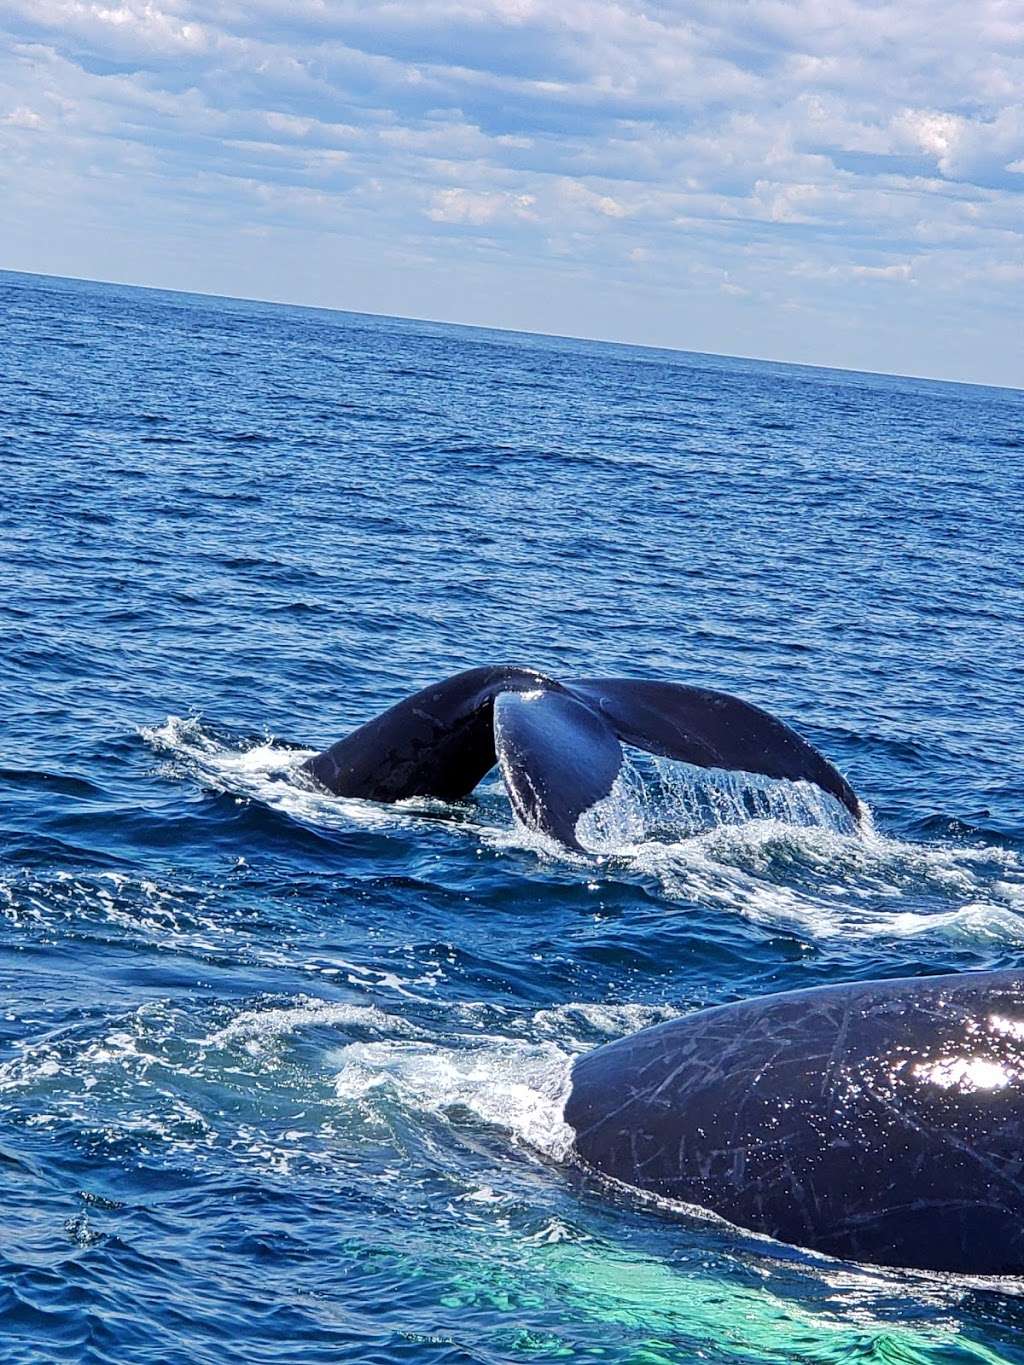 Cape Ann Whale Watch | 415 Main St, Gloucester, MA 01930, USA | Phone: (978) 283-5110